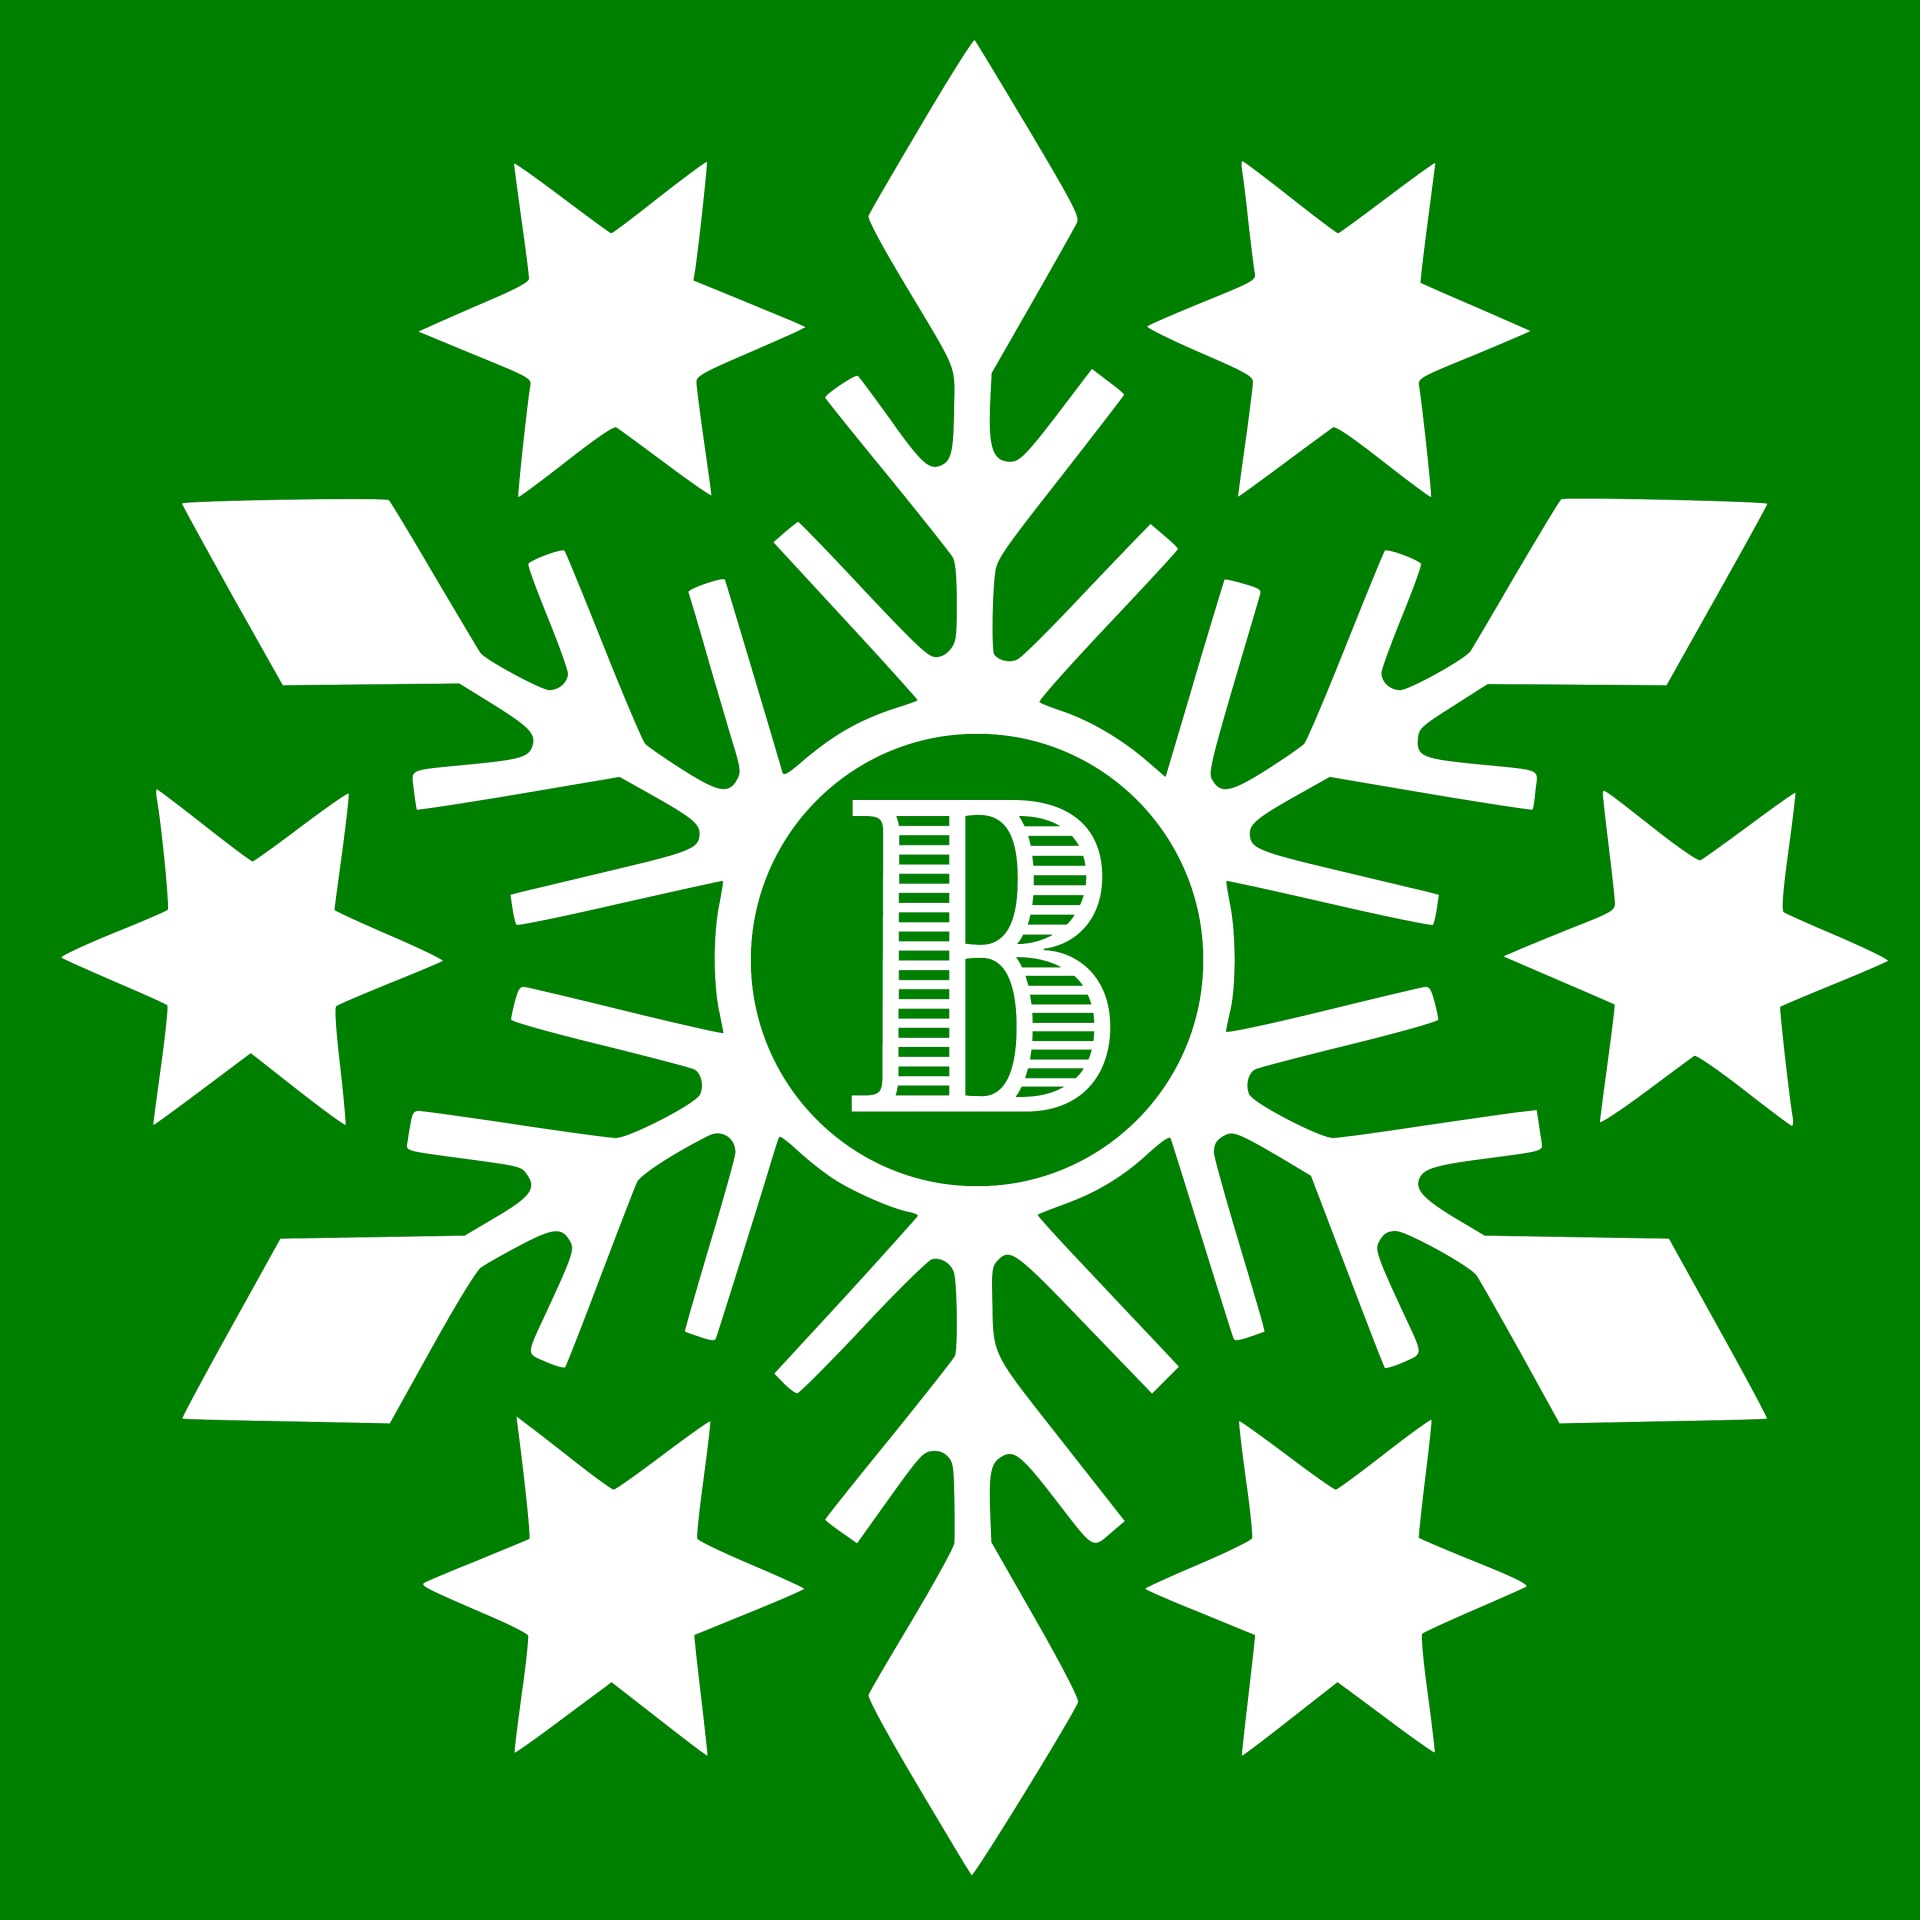 alphabet-snowflake-green-free-stock-photo-public-domain-pictures